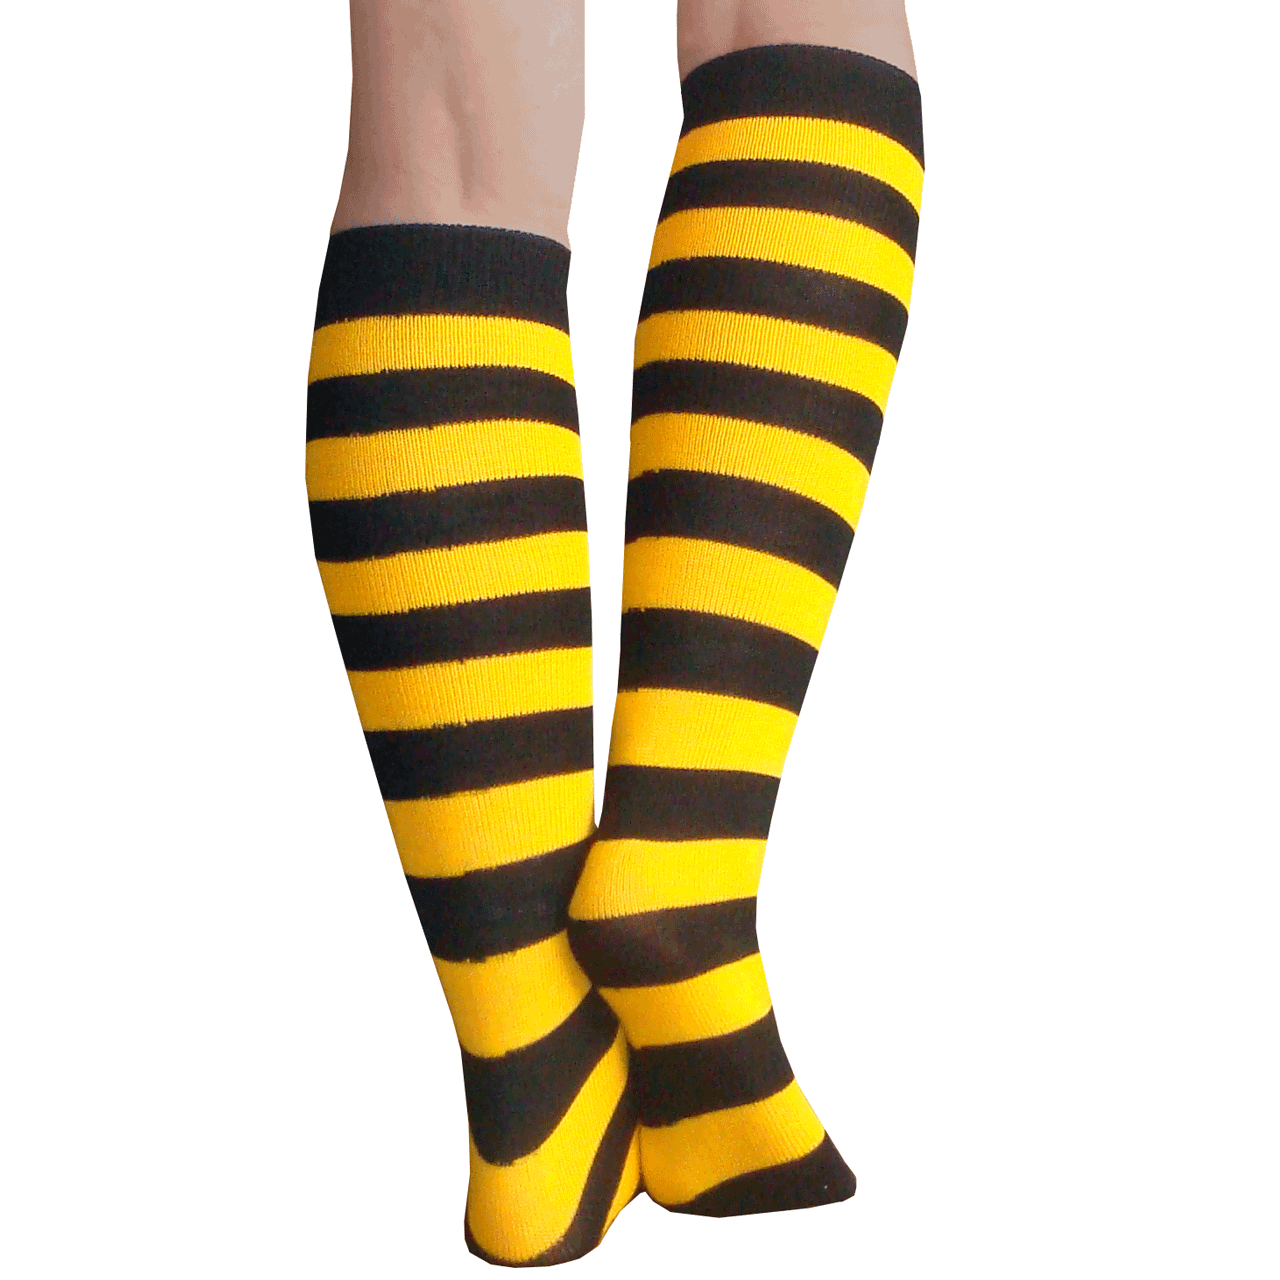 Striped Black/Gold Knee High Socks